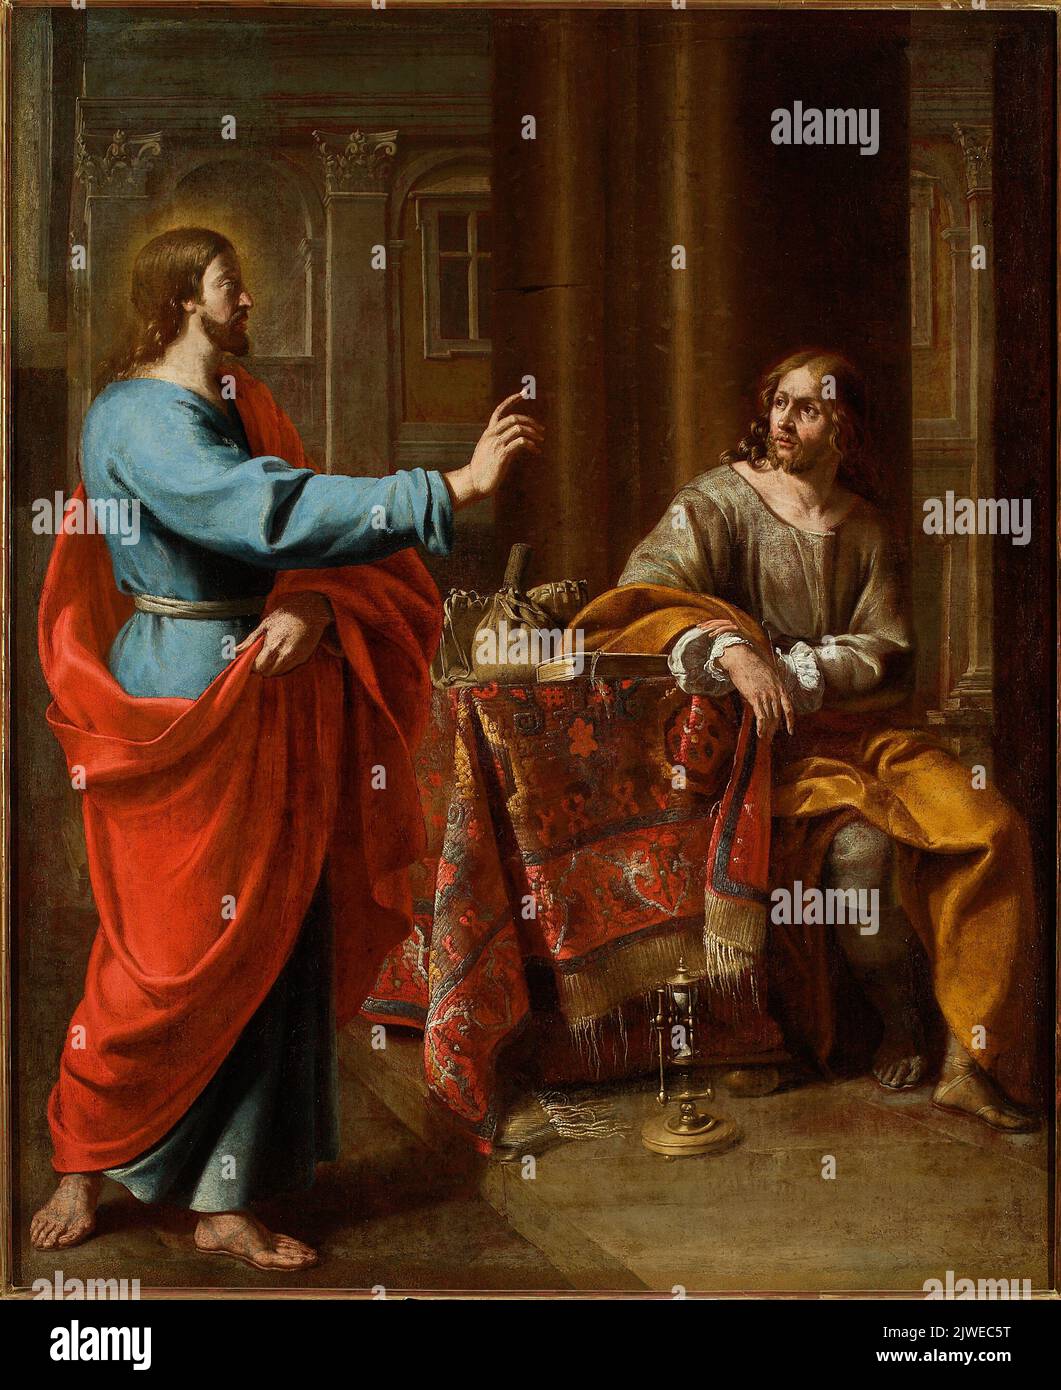 Calling of St. Matthew (Matthew 9:9, Mark 2:14, Luke 5:27-28). Loon, Theodor van (1581/1582-1649), painter Stock Photo